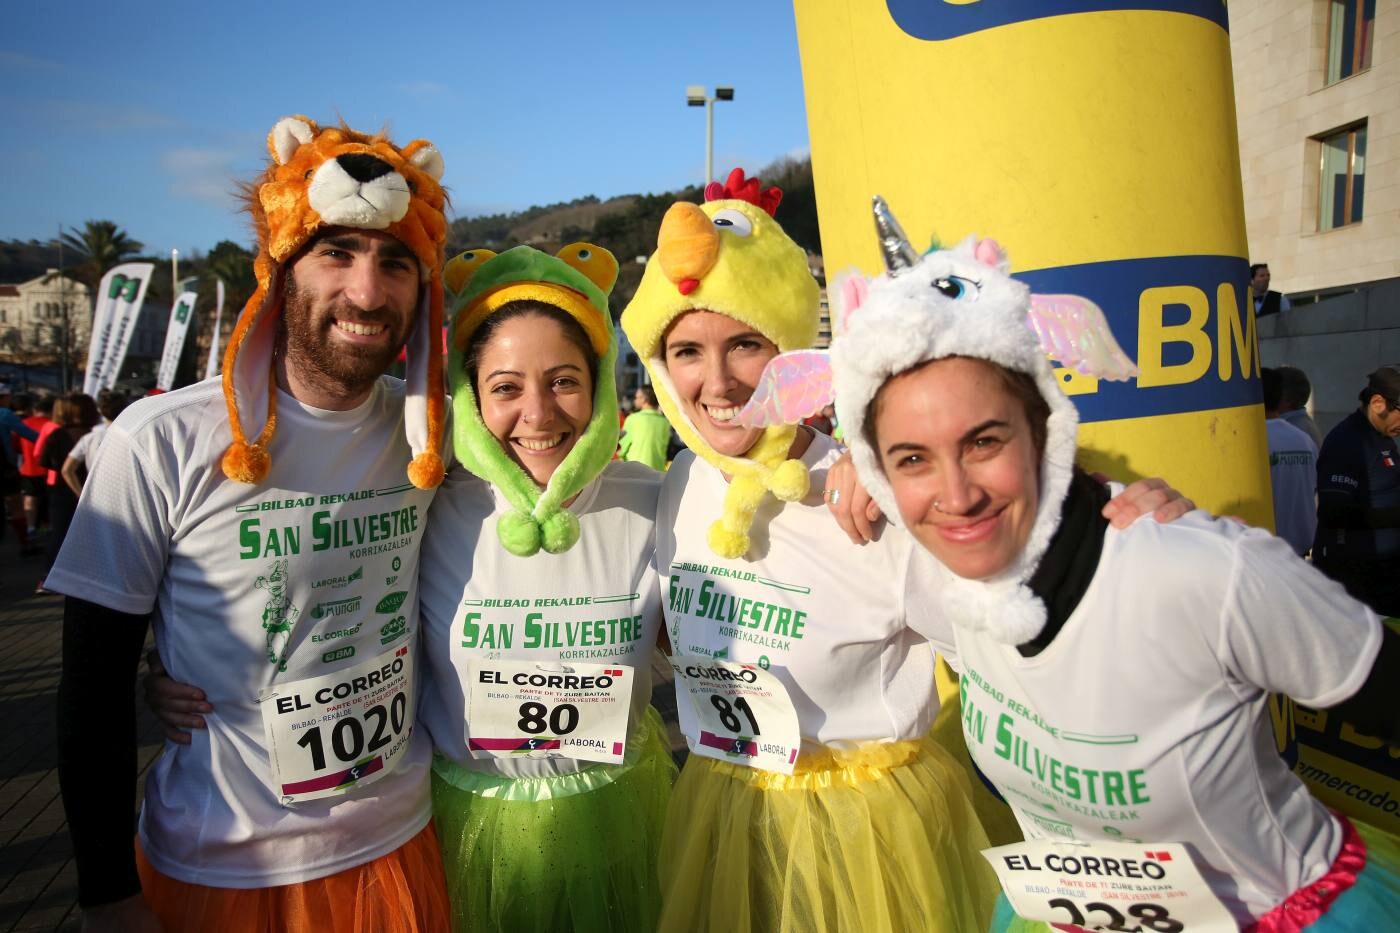 Fotos: Bilbao se llena de &#039;runners&#039; por la San Silvestre de Rekalde